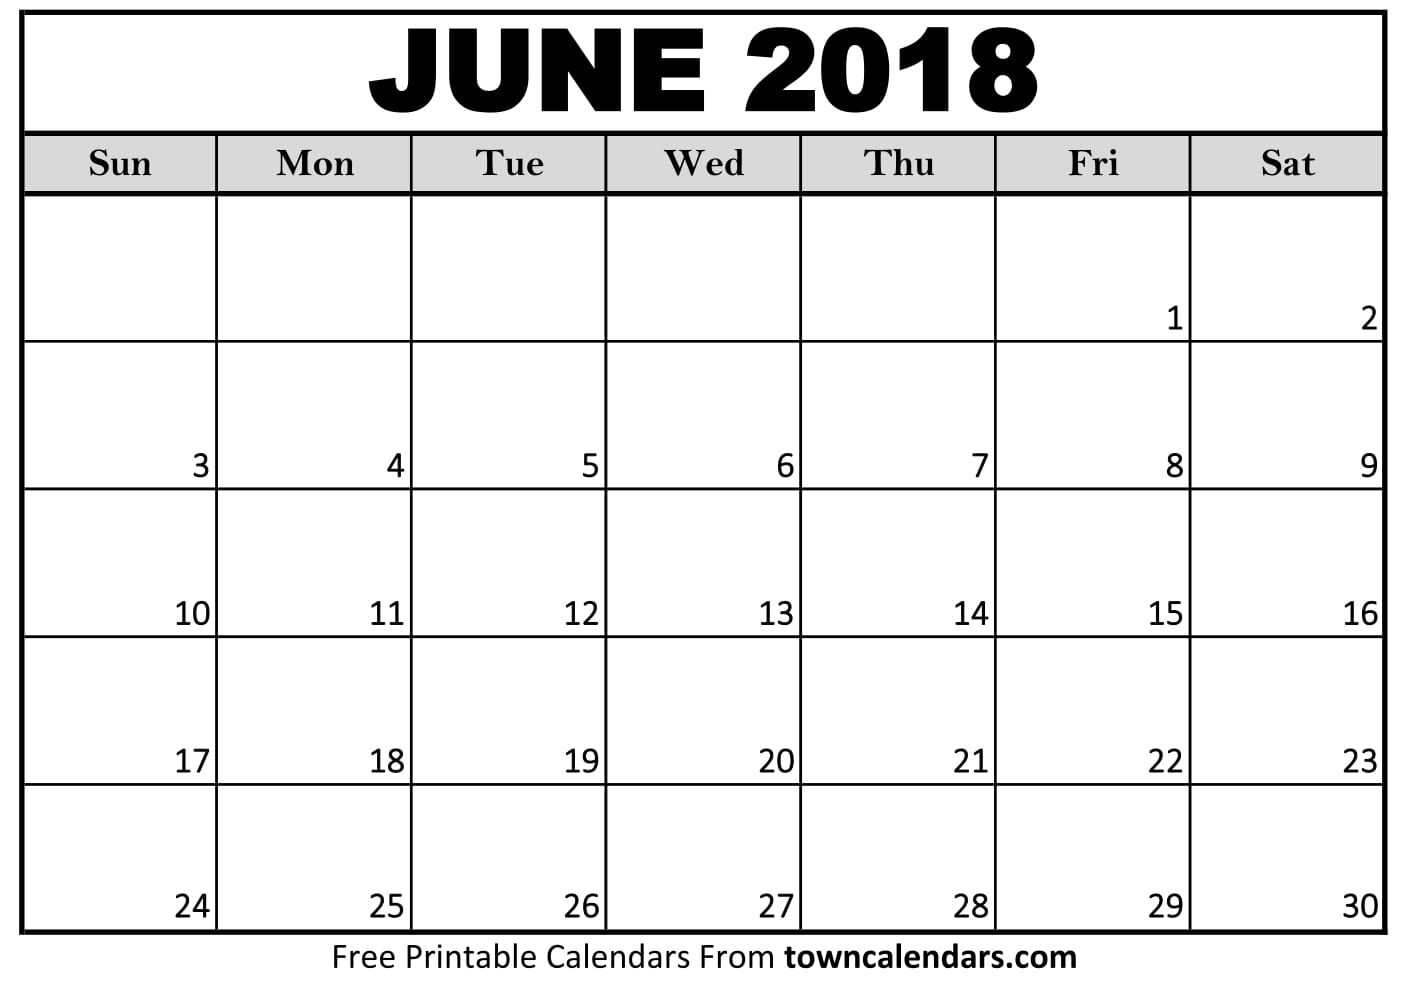 Free 5 June 2018 Calendar Printable Template Source Template